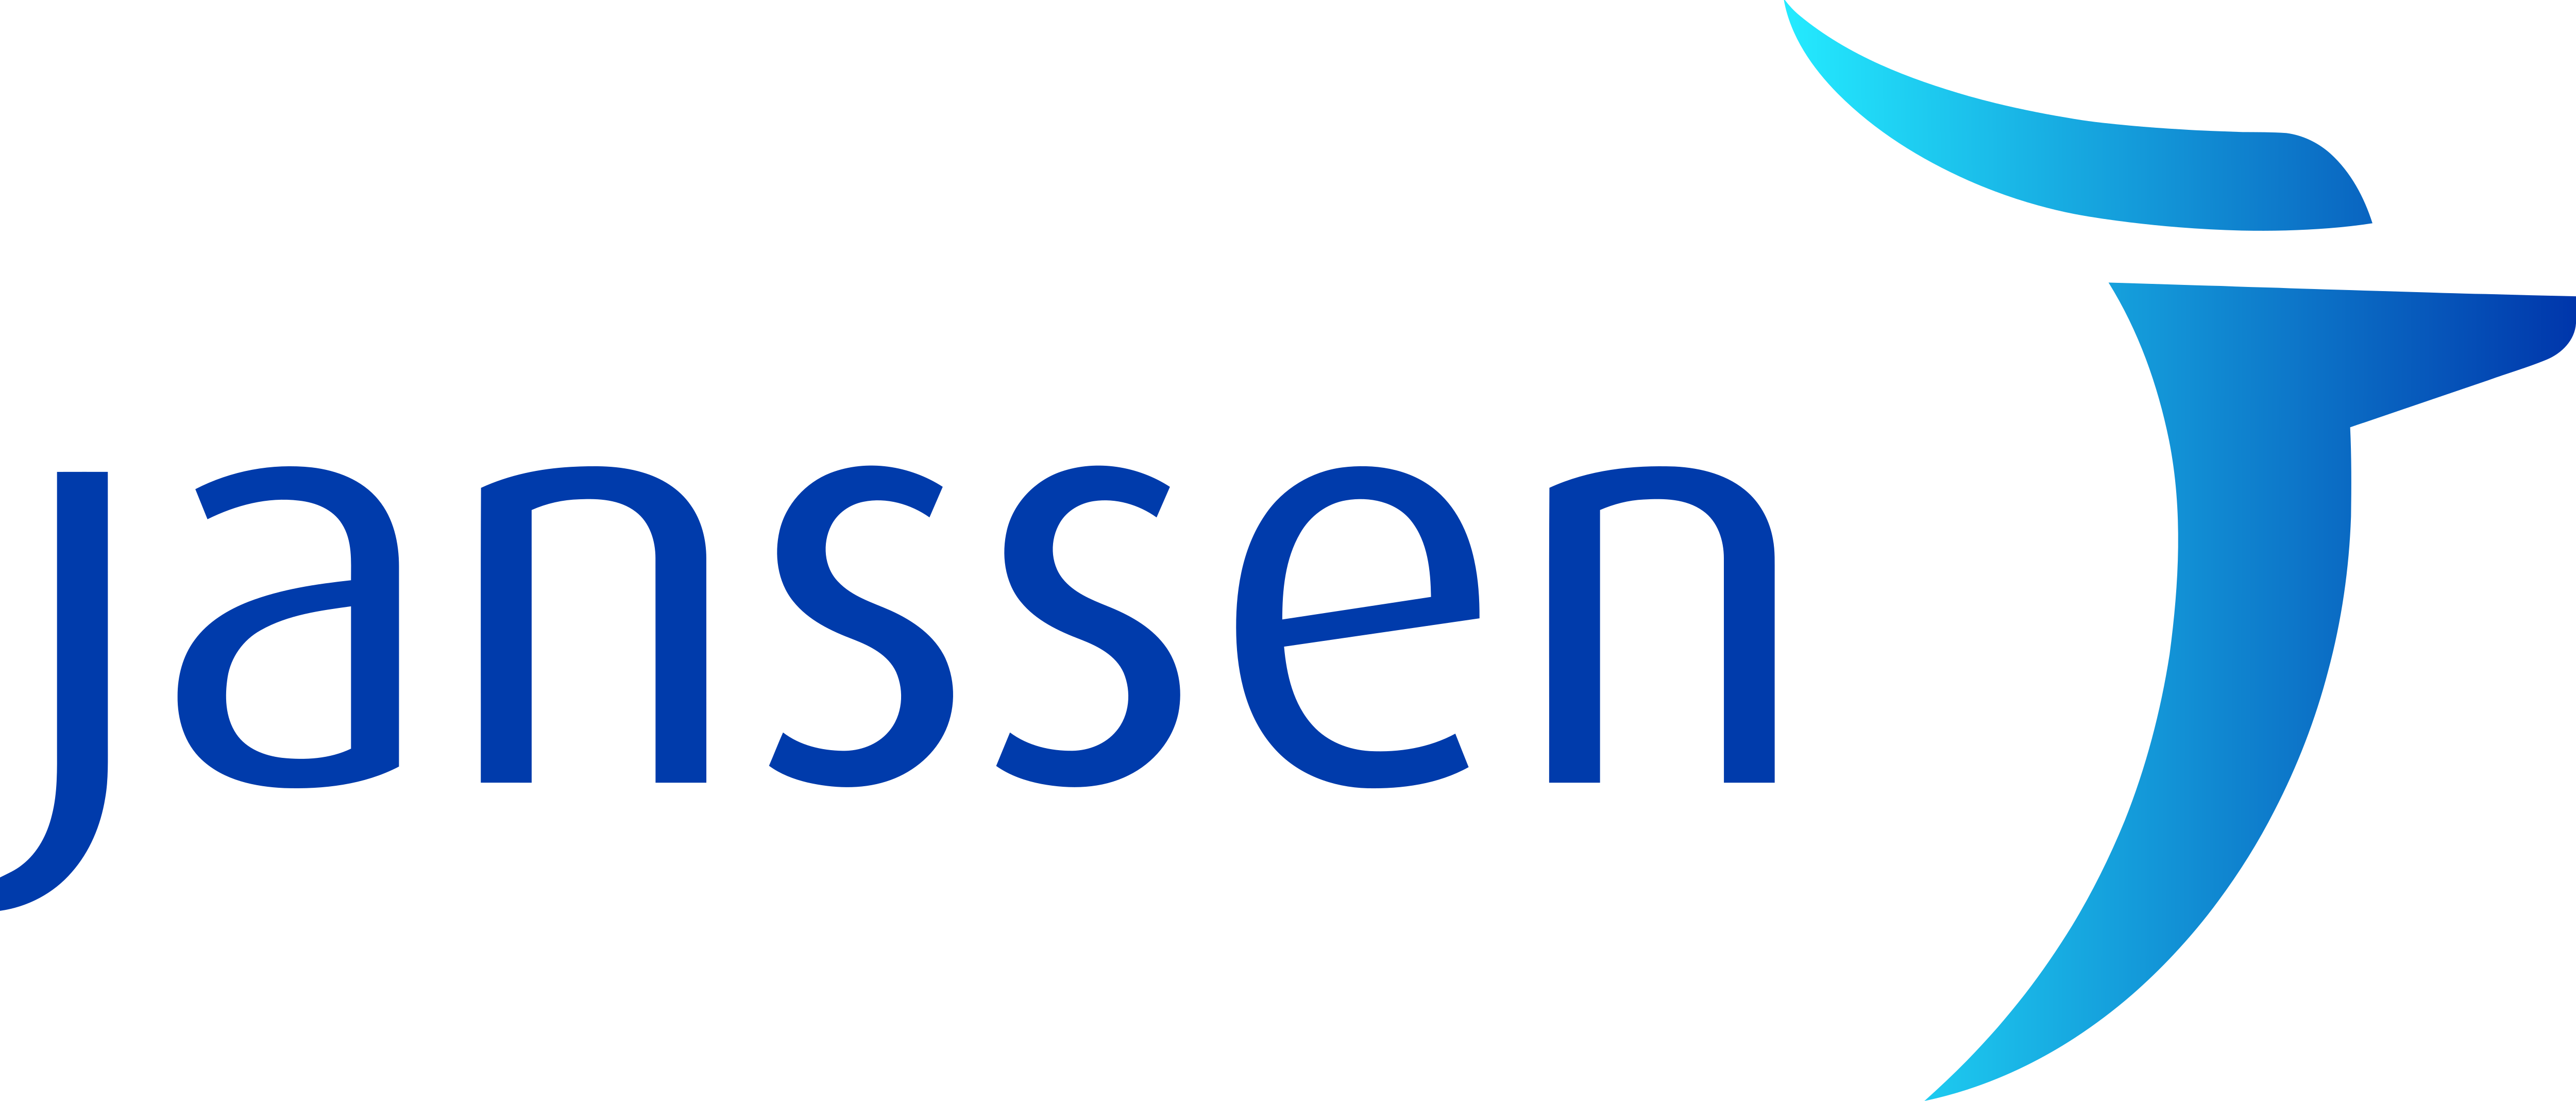 Janssen_Pharmaceutica_Logo_transparent